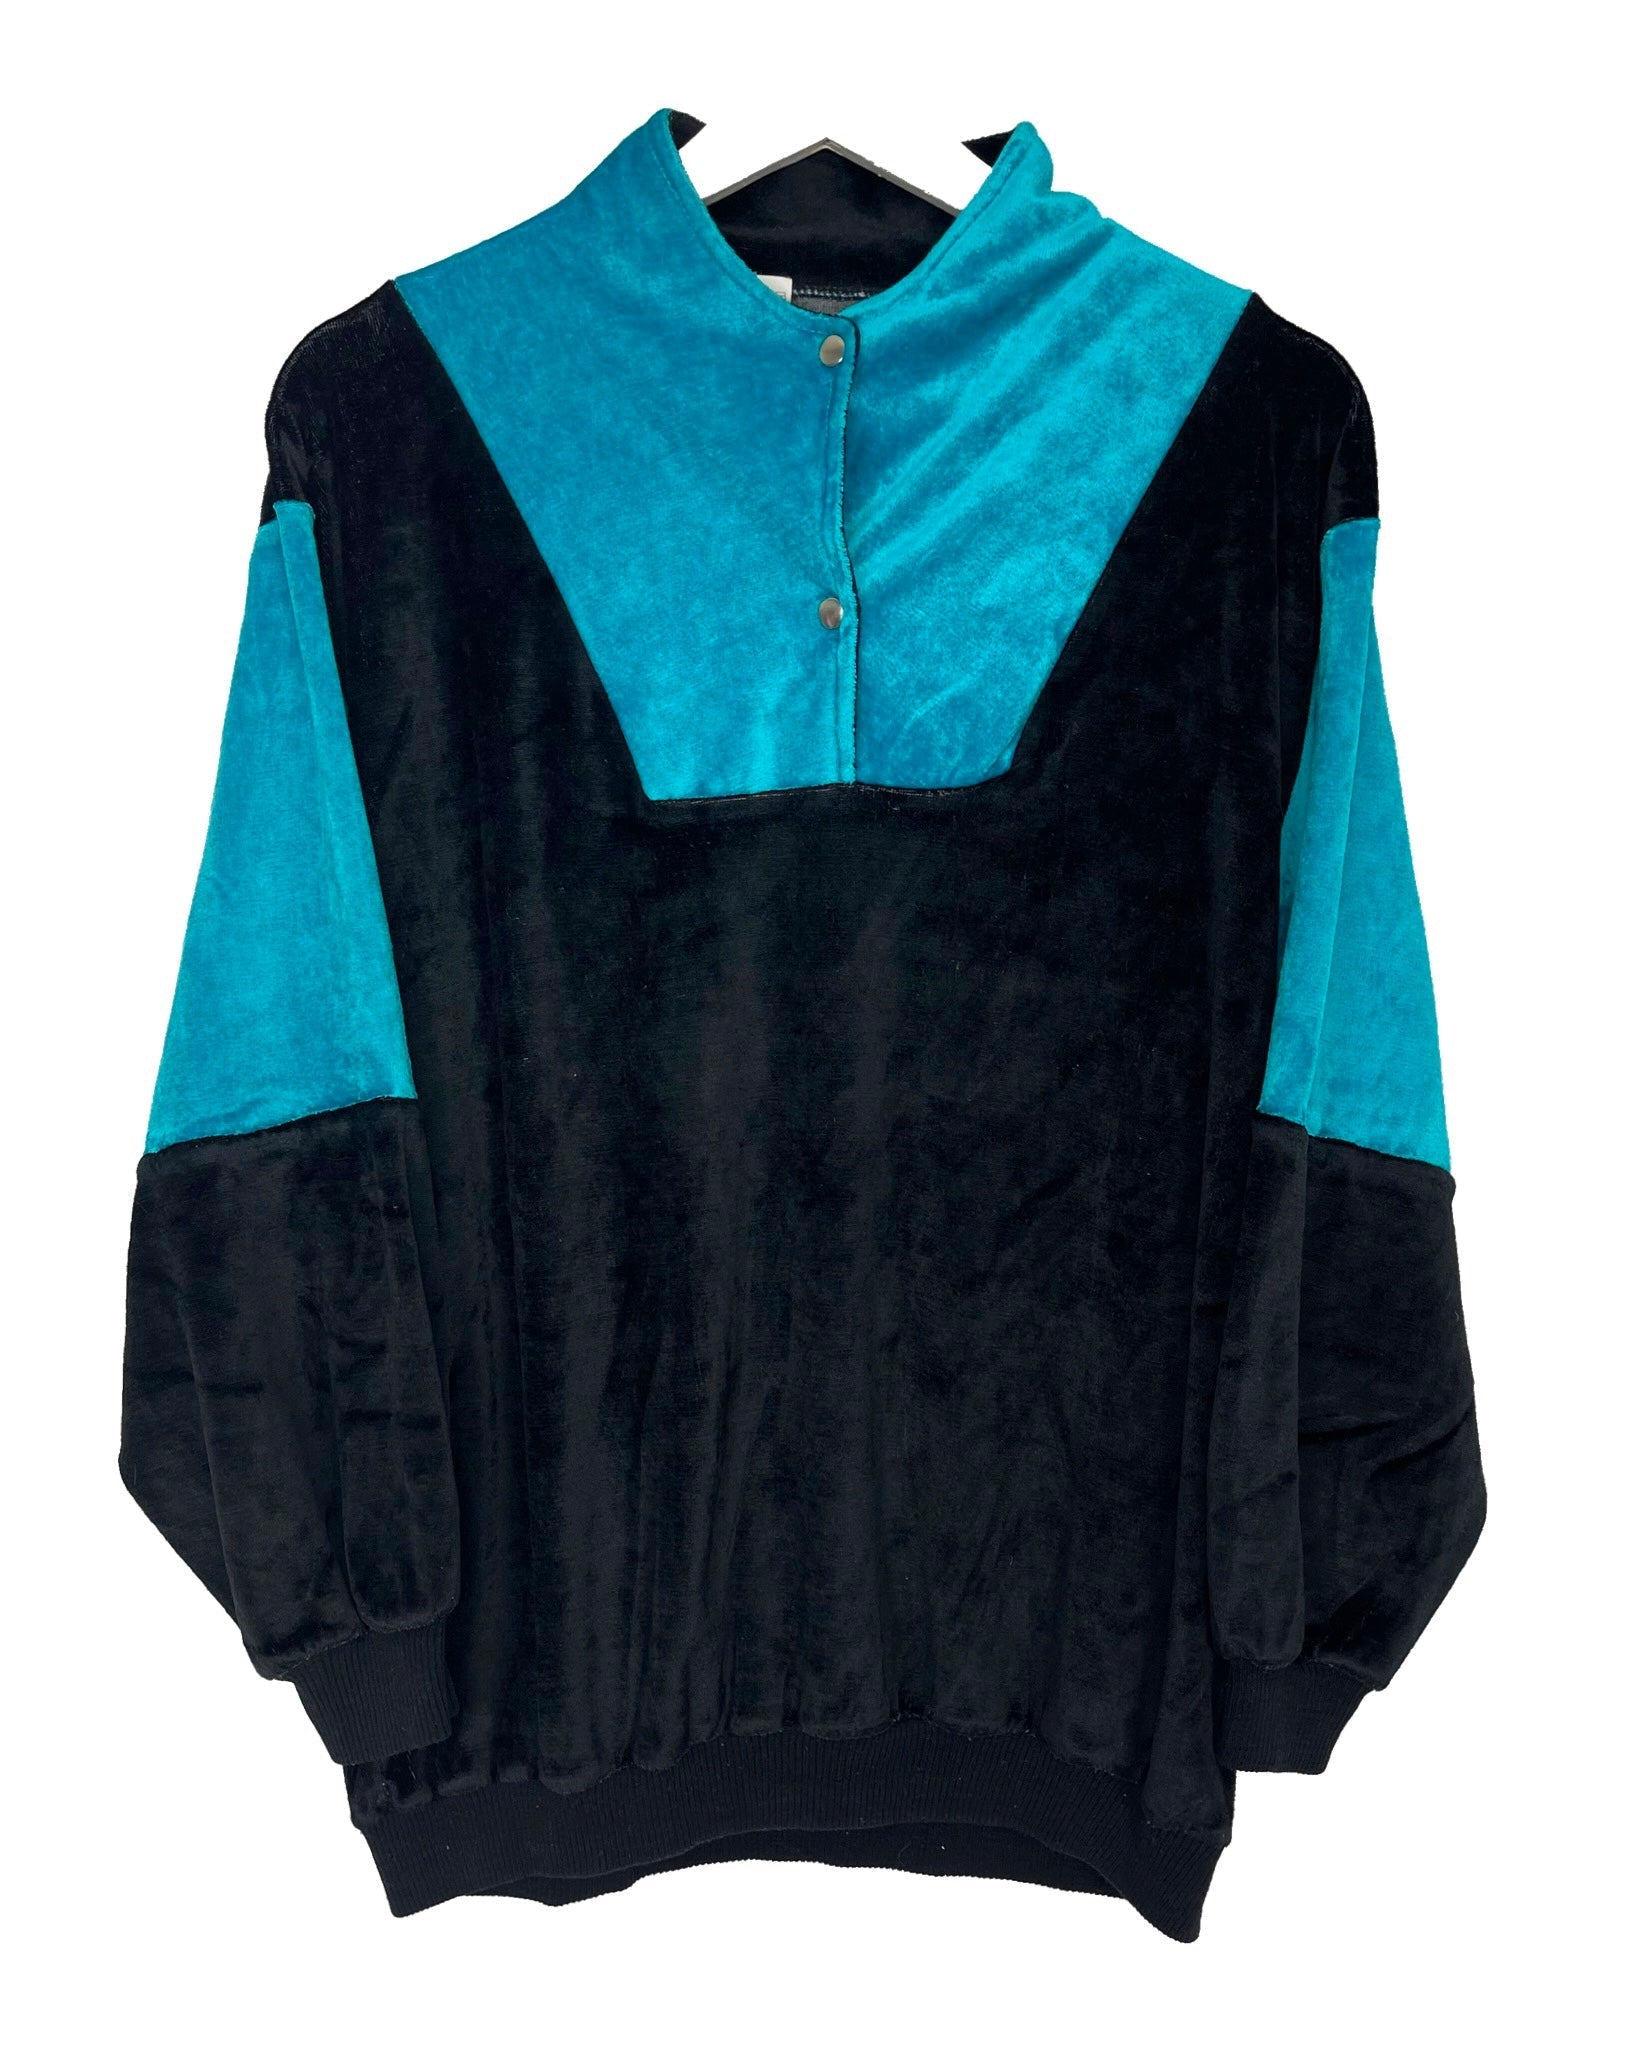  Sweatshirt Vintage Sweat peau de pêche - M - PLOMOSTORE